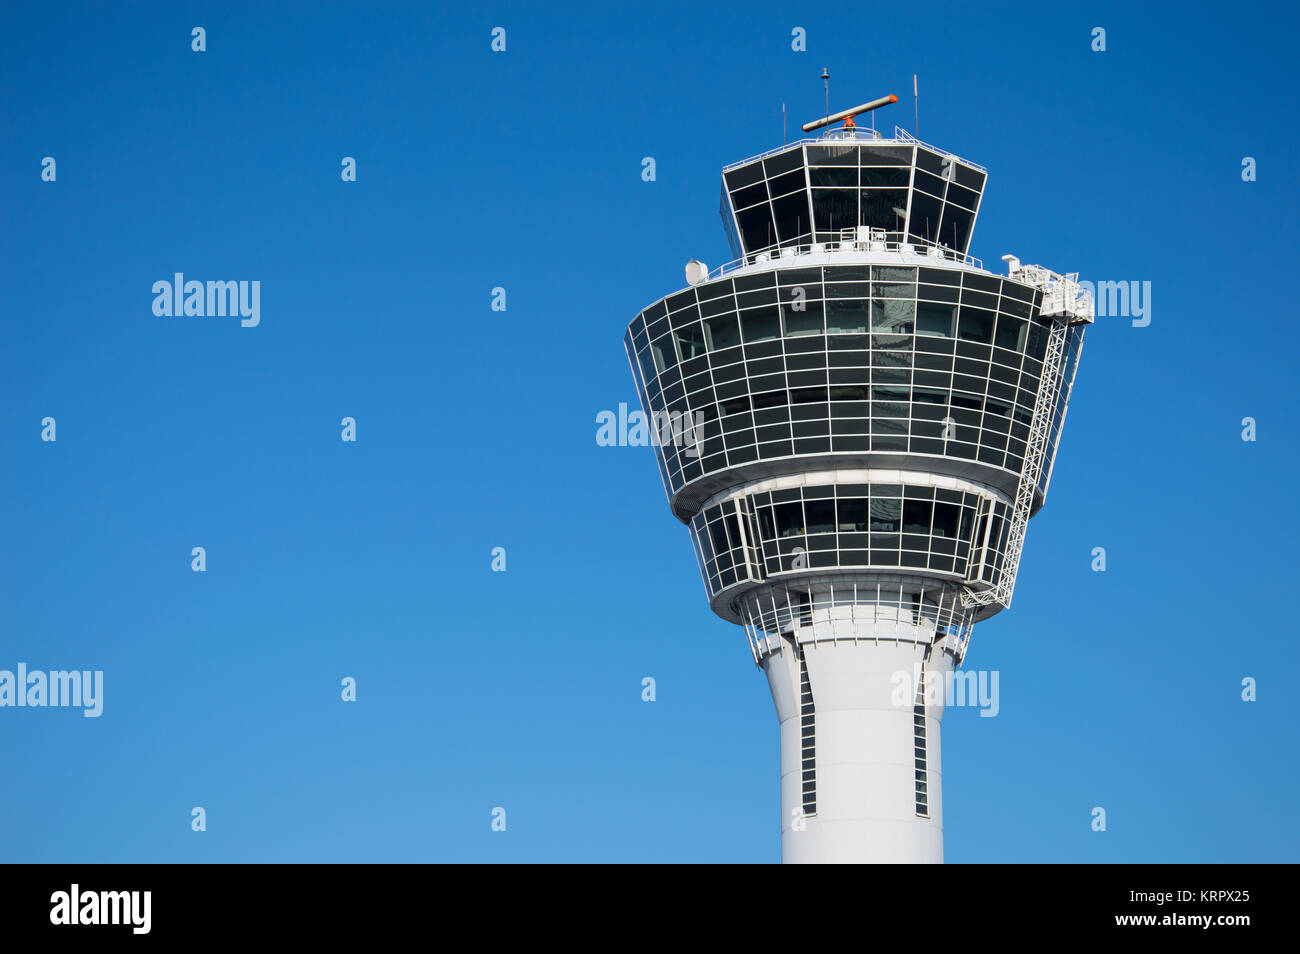 Modern air traffic control tower in international passenger airport Stock Photo